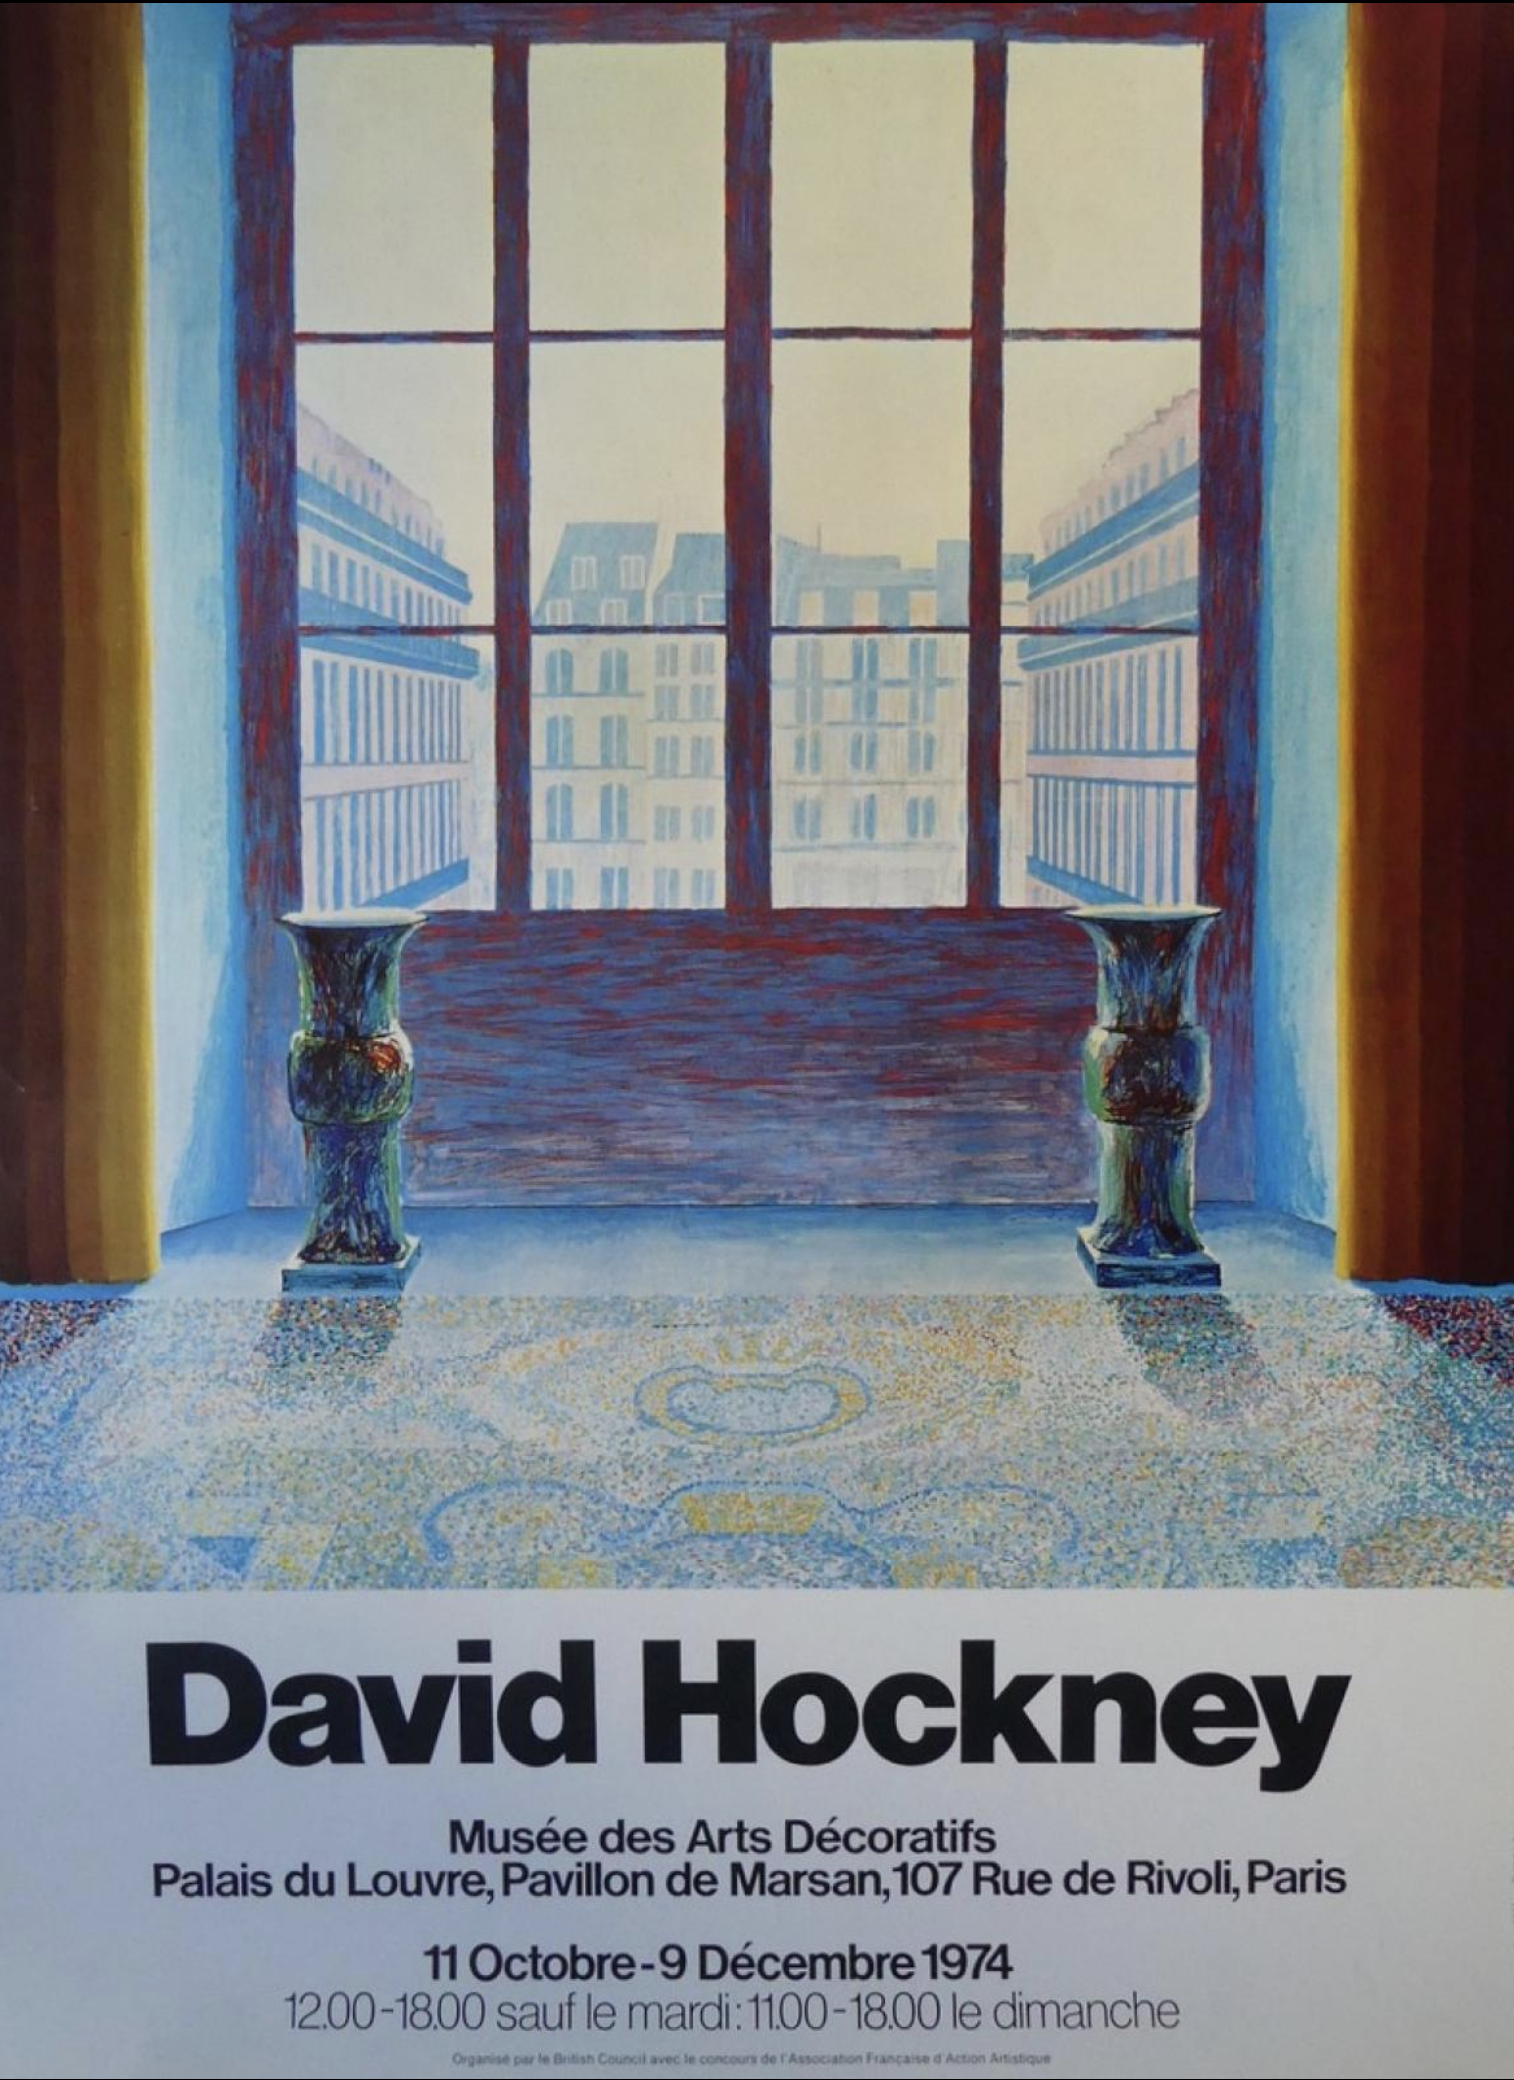 David Hockney Musee des Arts Decoratifs Original Vintage Poster